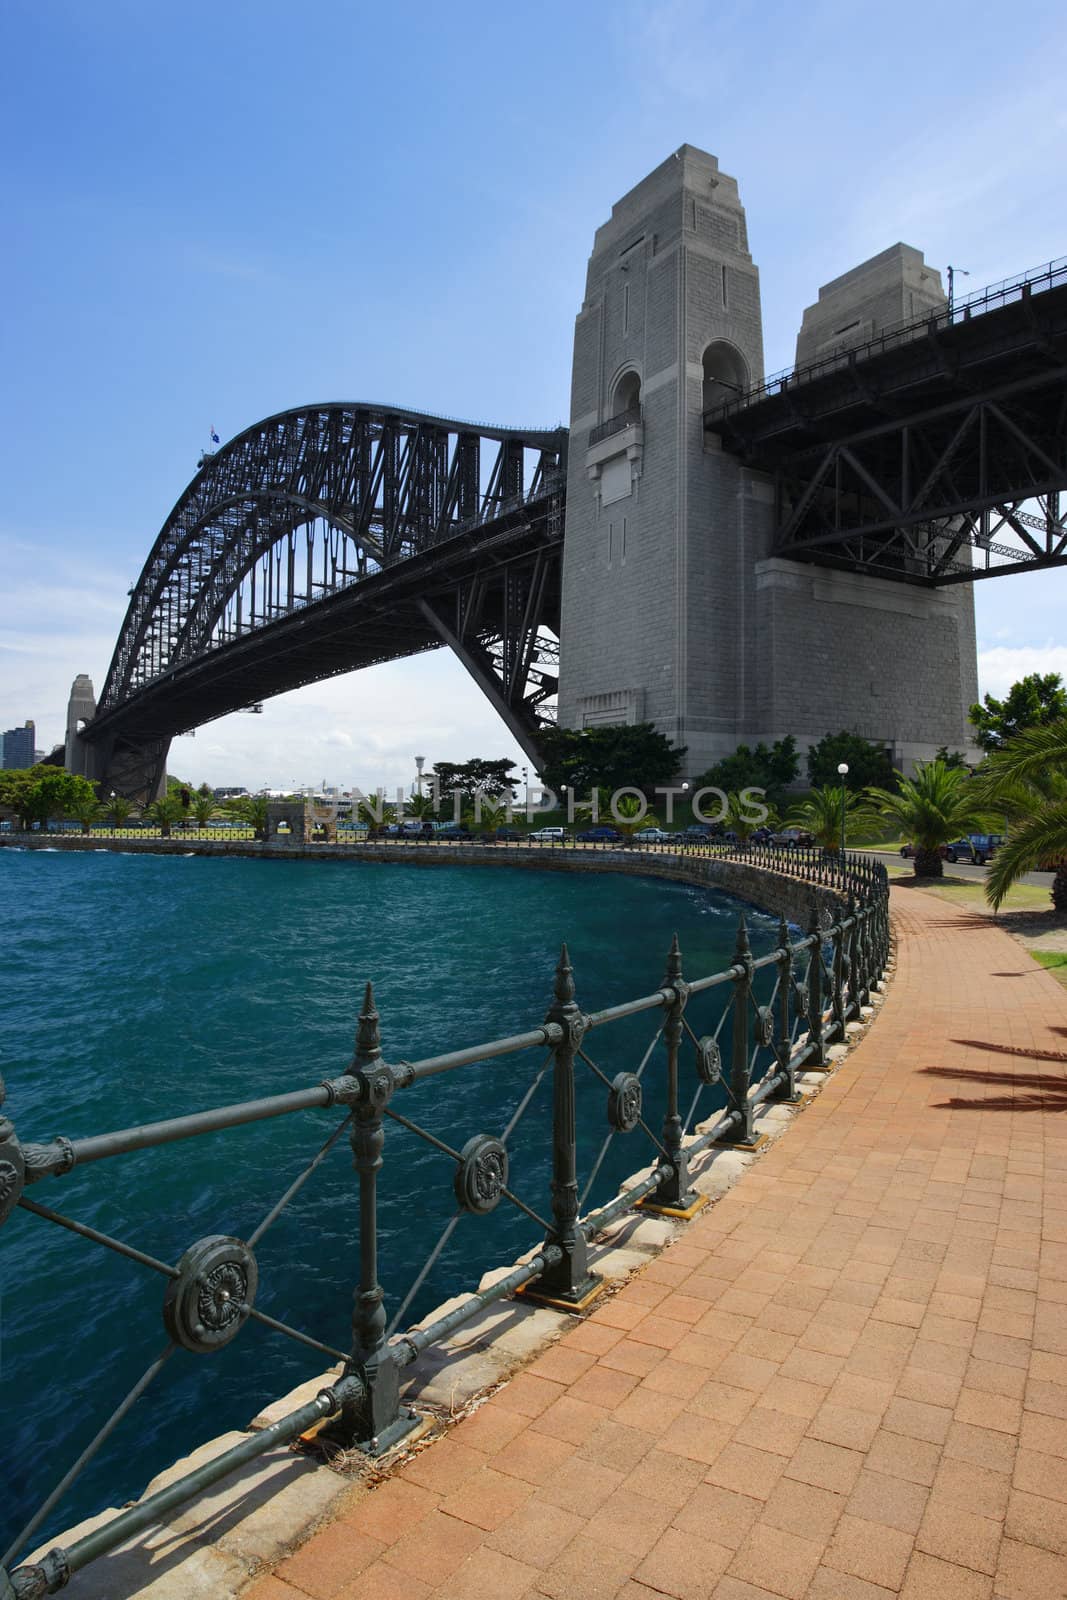 Walking on the path that leads beneath the Sydney Harbour Bridge in Australia.
